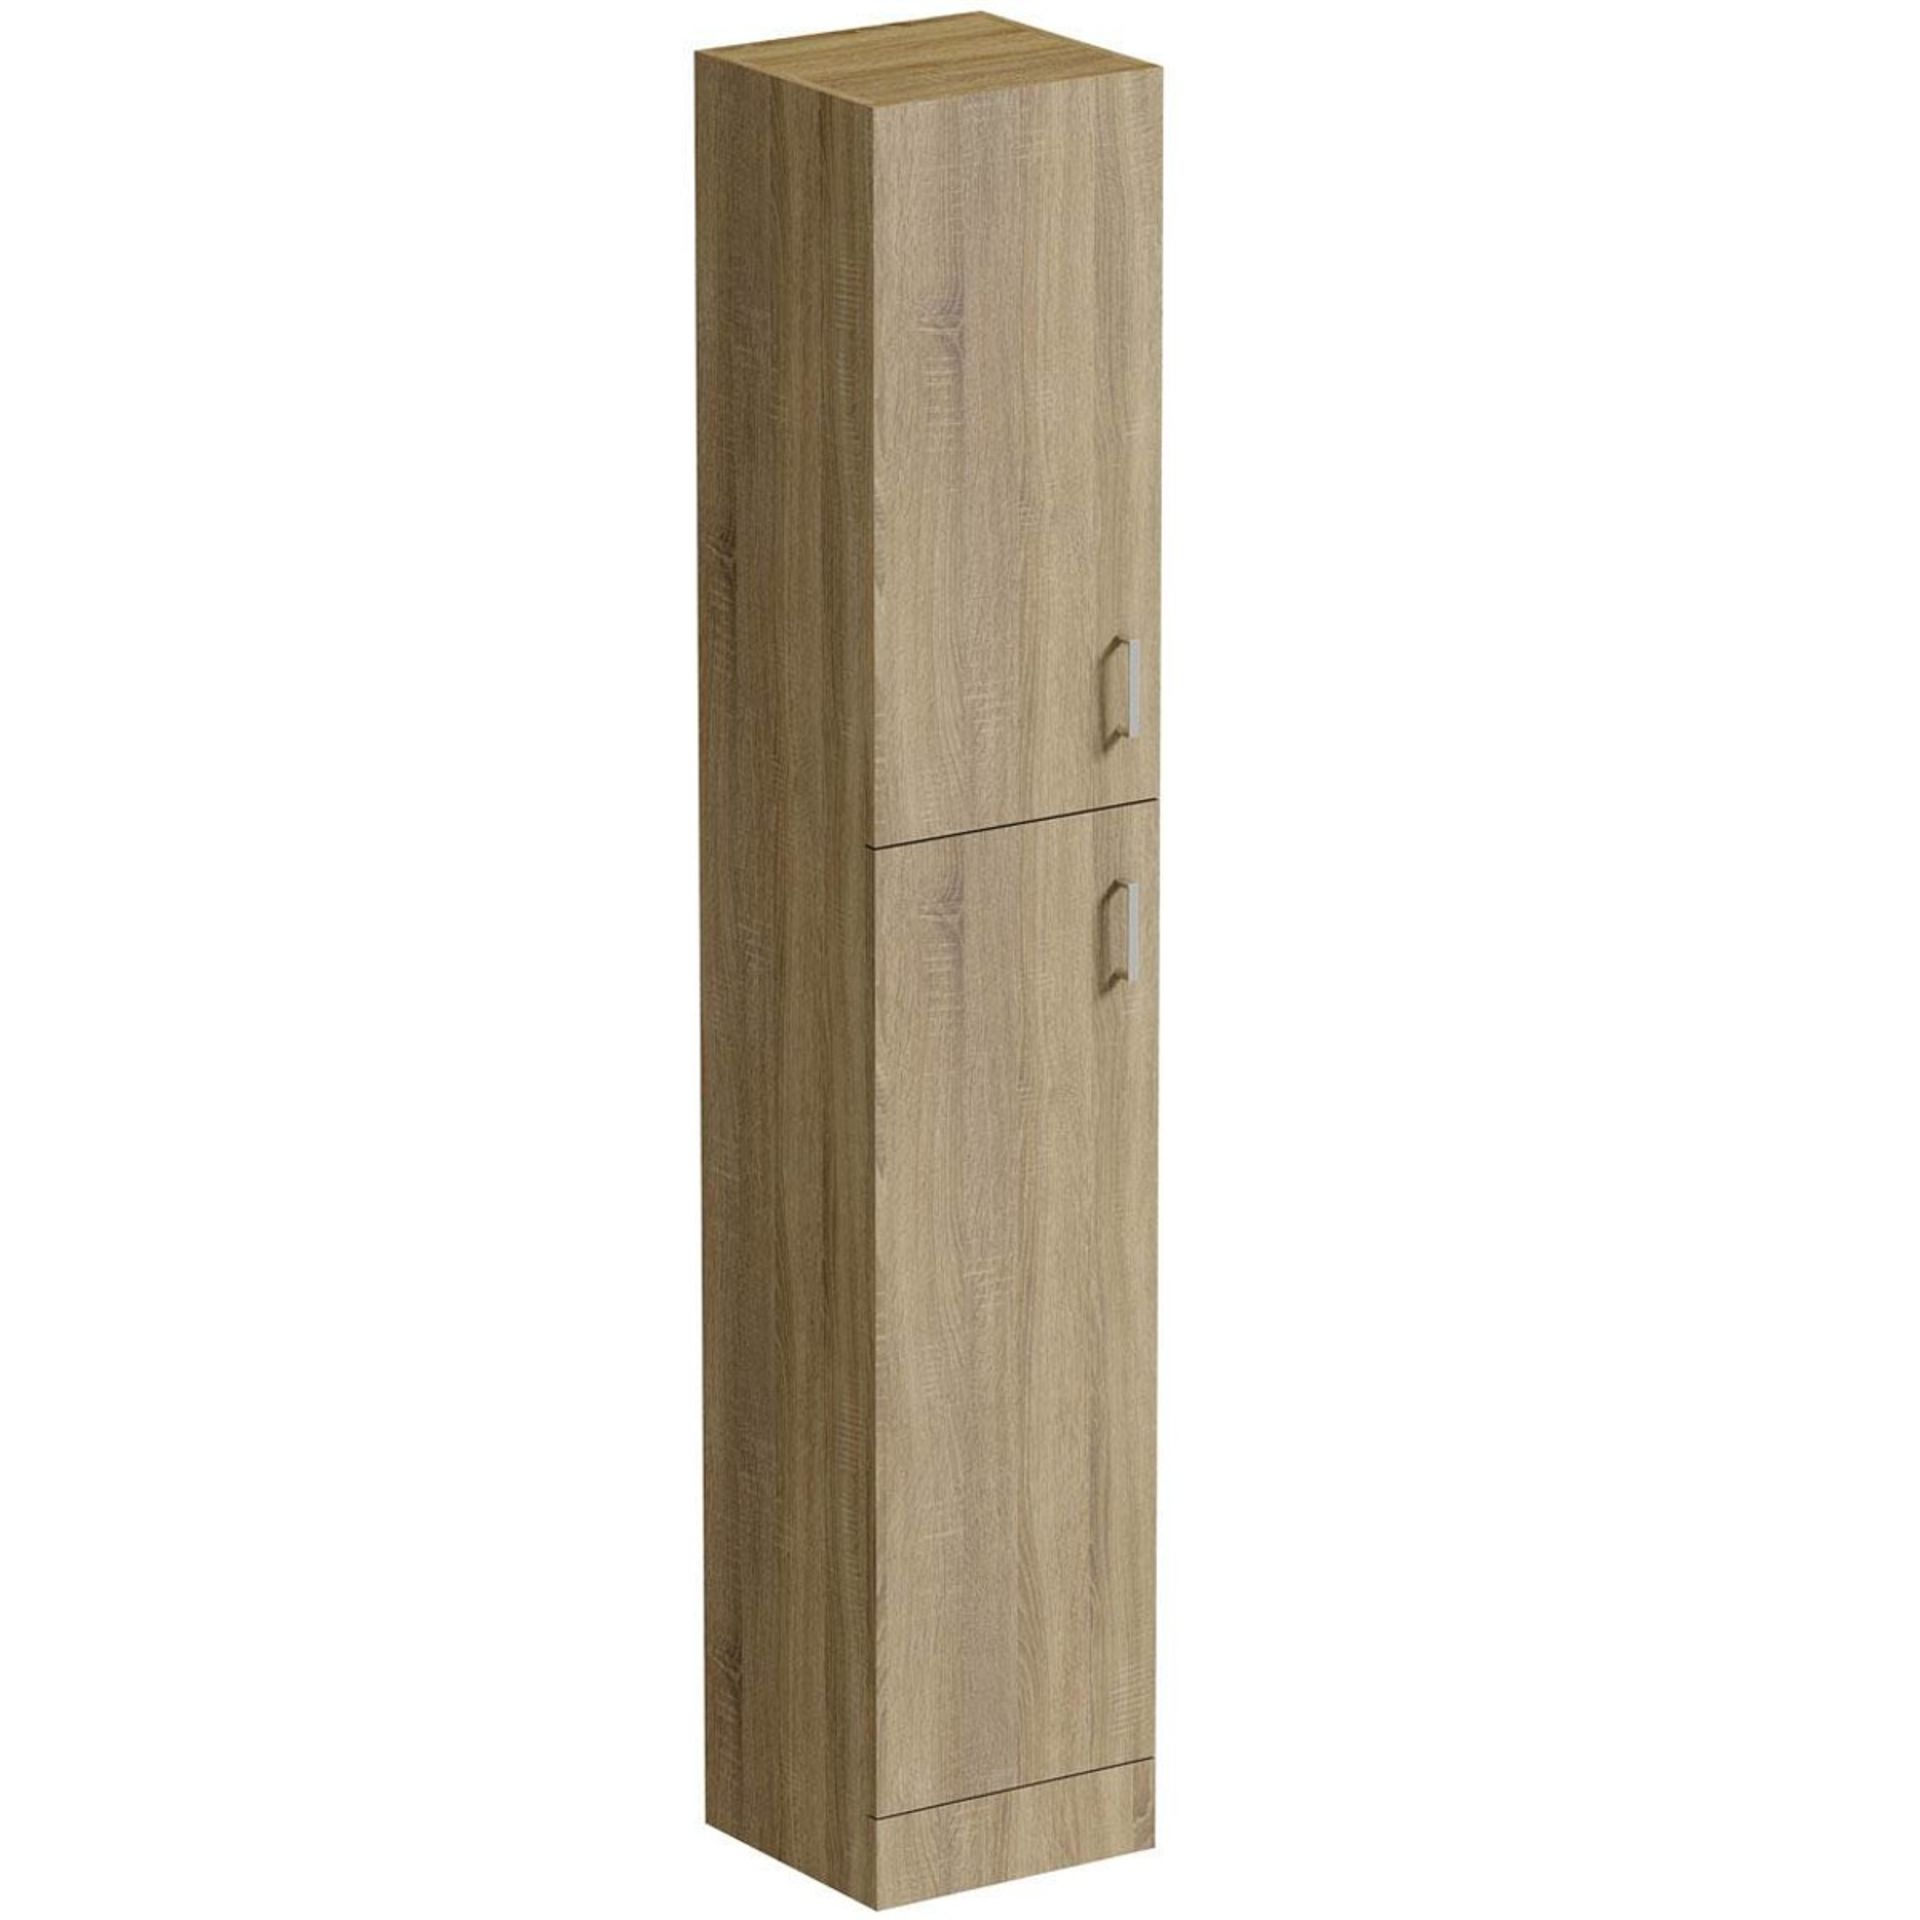 1 x Sienna Oak 300mm Tall Bathroom Storage Unit - Unused Stock - CL190 - Ref BR067 - Location: - Image 2 of 5